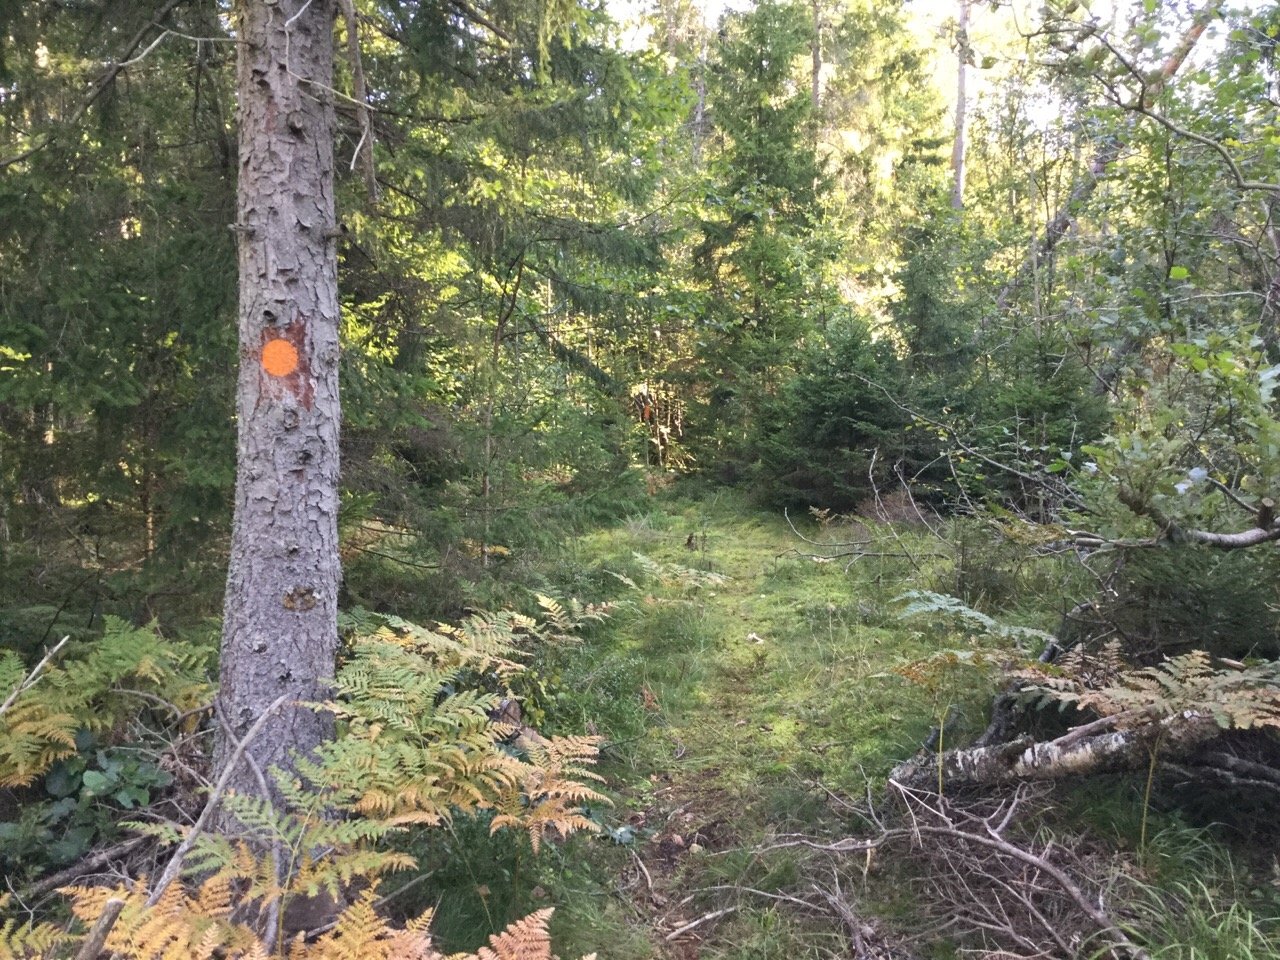 Follow the marked trail through Brännström nature reserve.